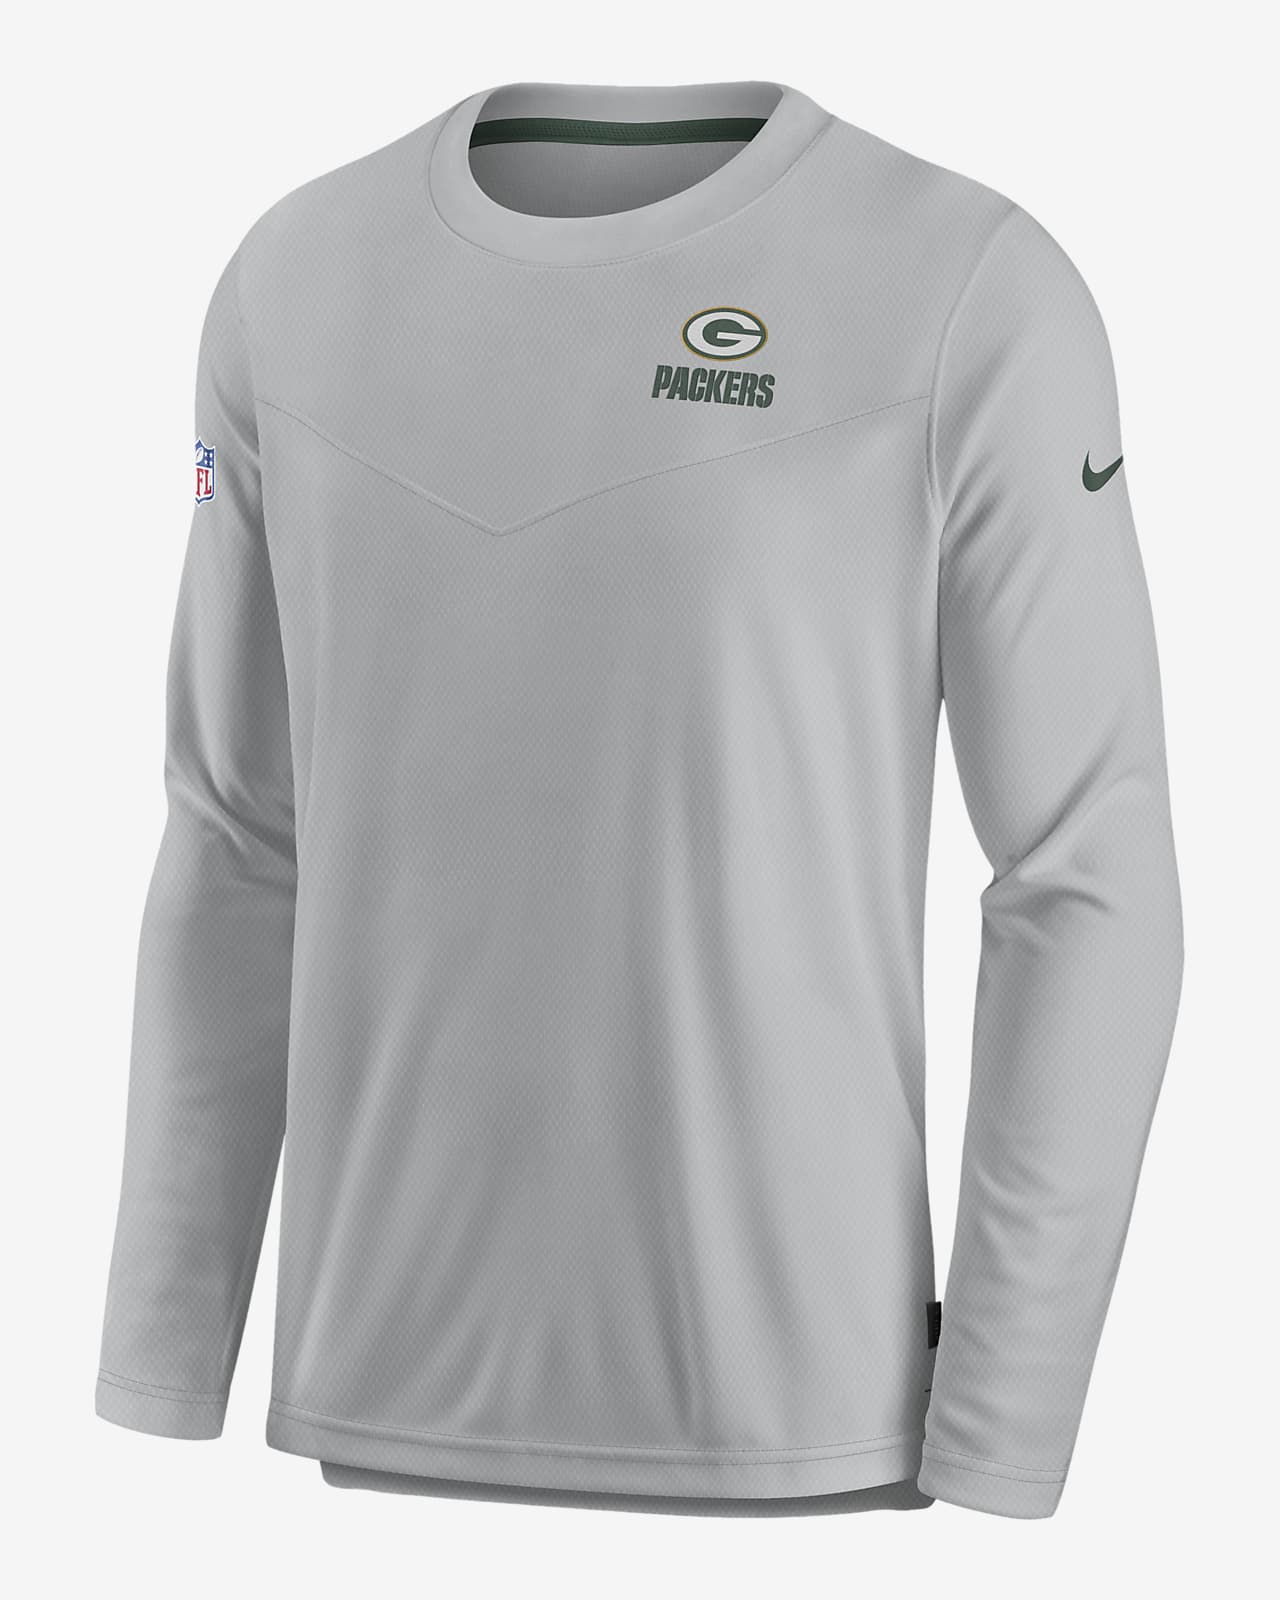 Nike Dri-FIT Lockup (NFL Green Bay Packers) Men's Long-Sleeve Top